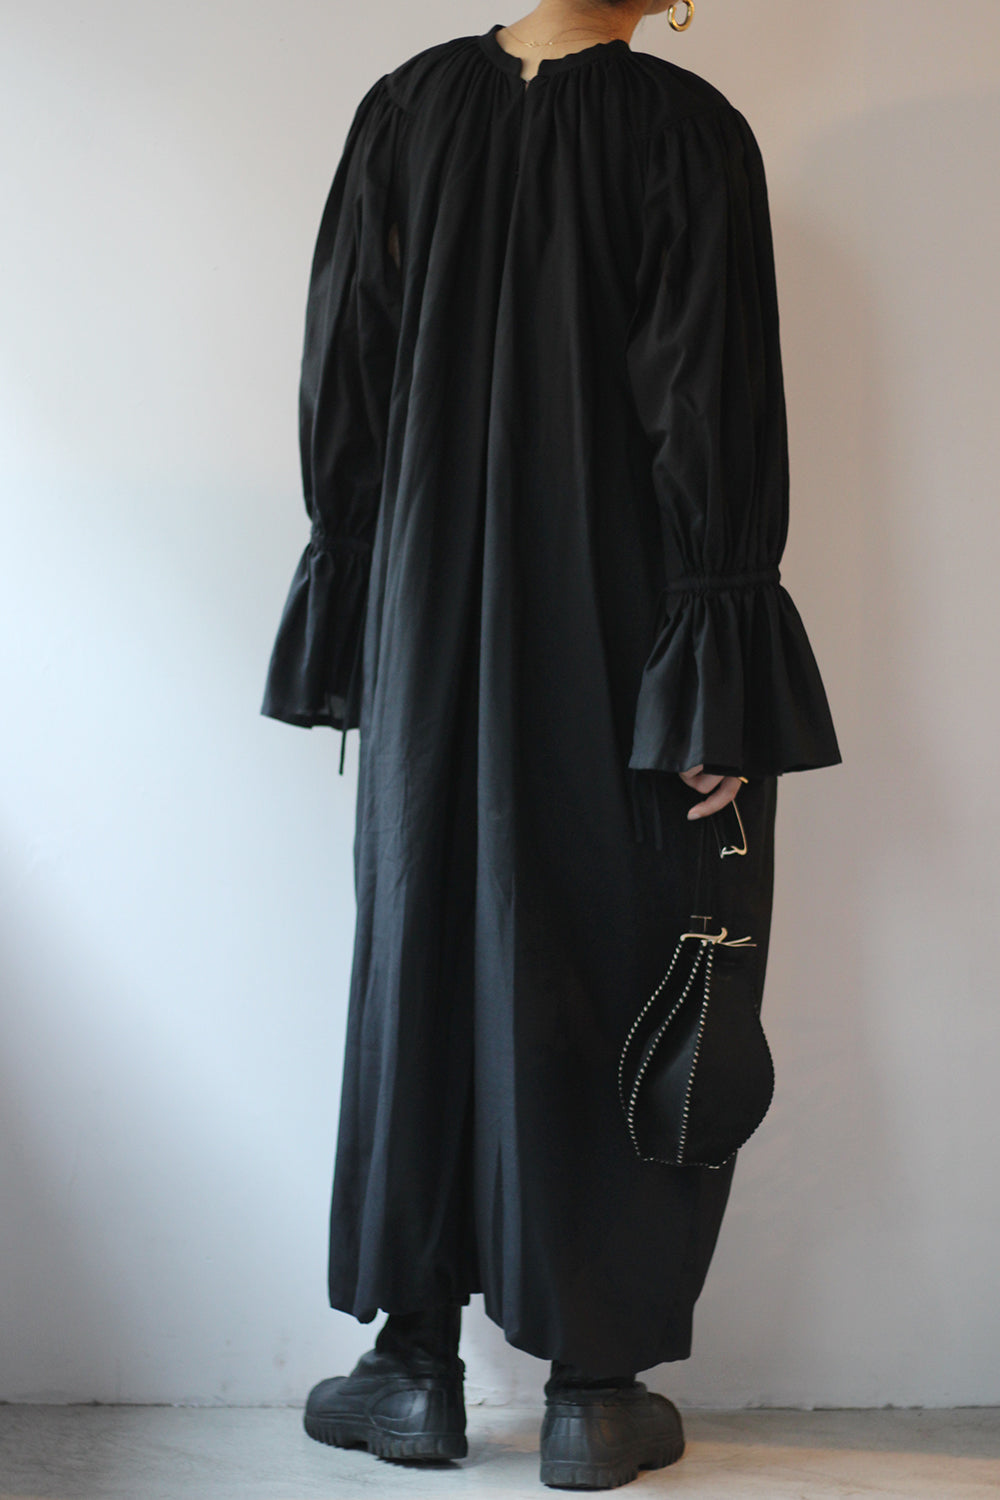 WRYHT "GATHERED SLEEVE FOLK DRESS" (black)